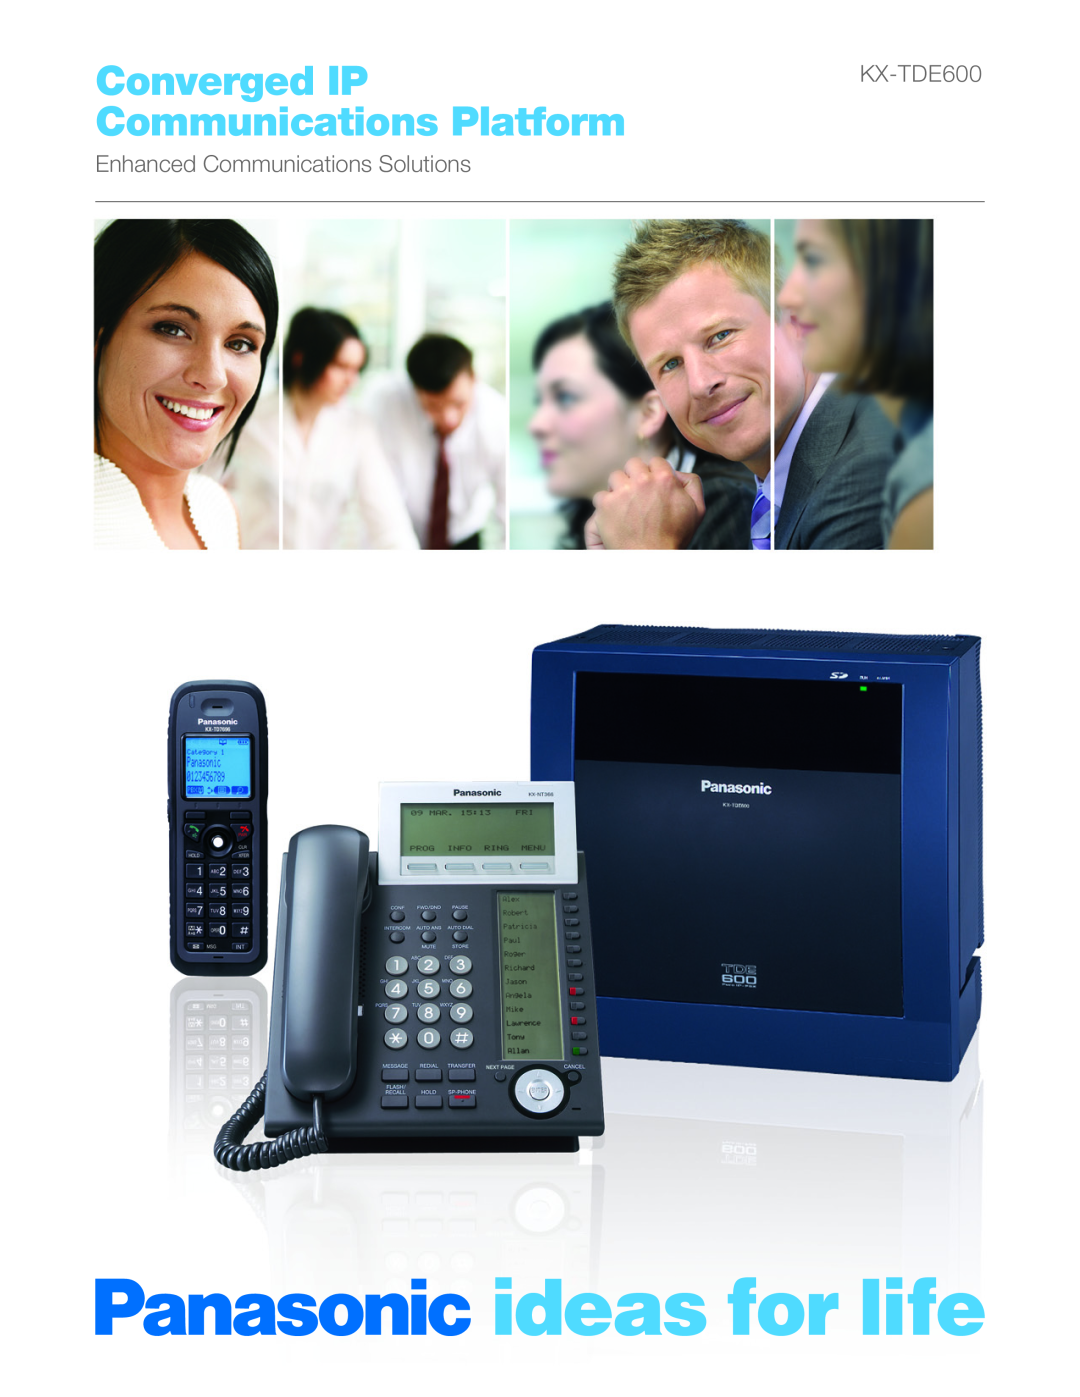 Panasonic KX-DT300, KX-HGT100B manual Converged IP Communications Platform, KX-TDE600, Enhanced Communications Solutions 